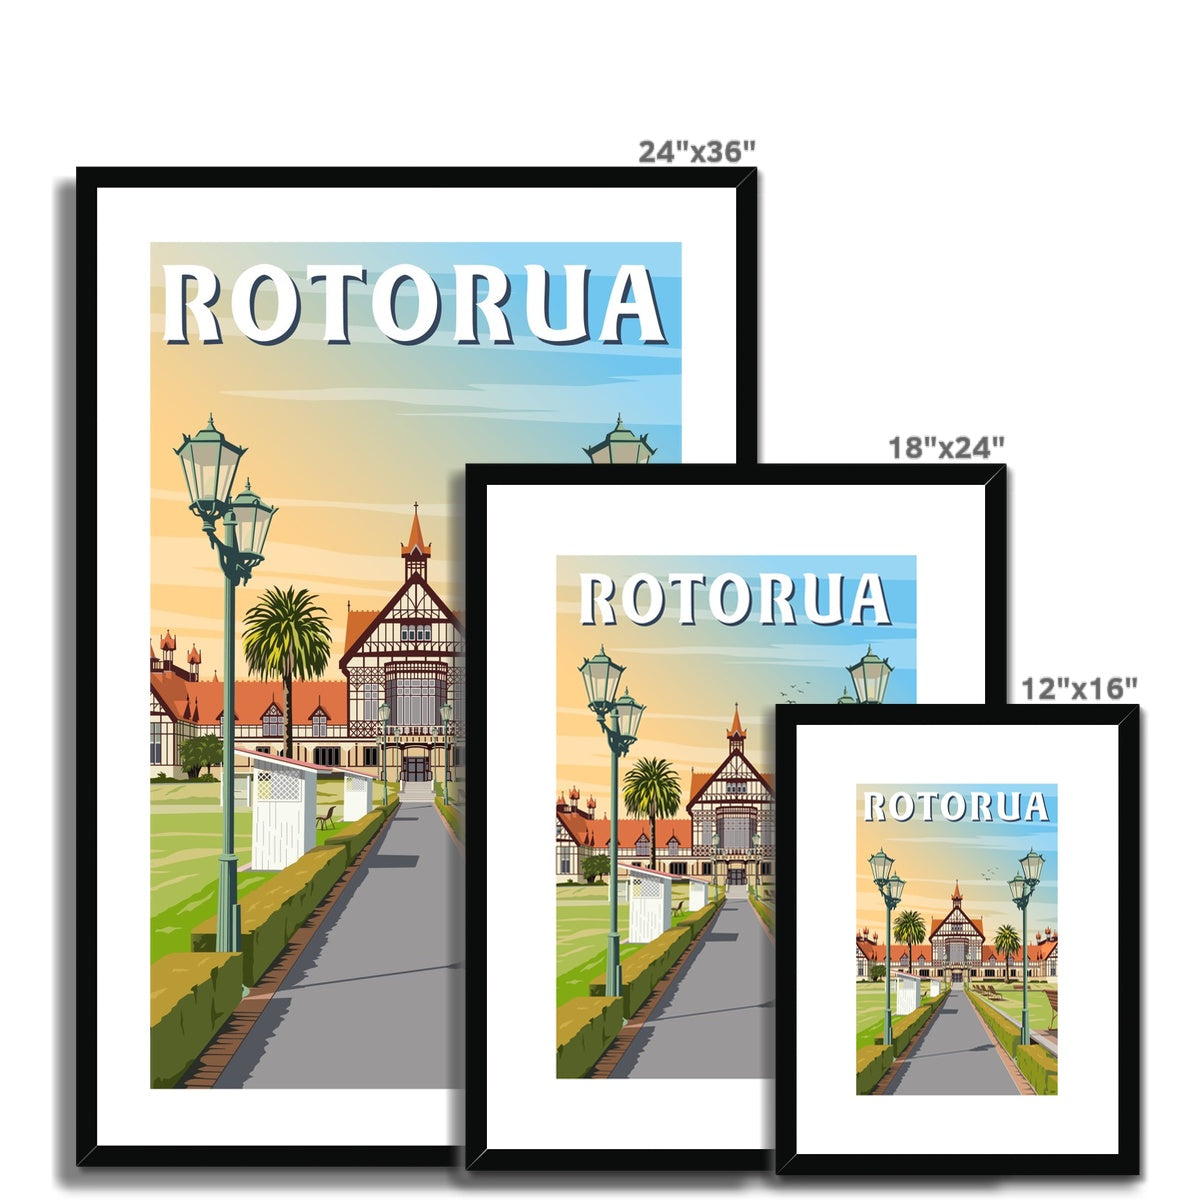 Rotorua Museum and Gardens Framed & Mounted Print